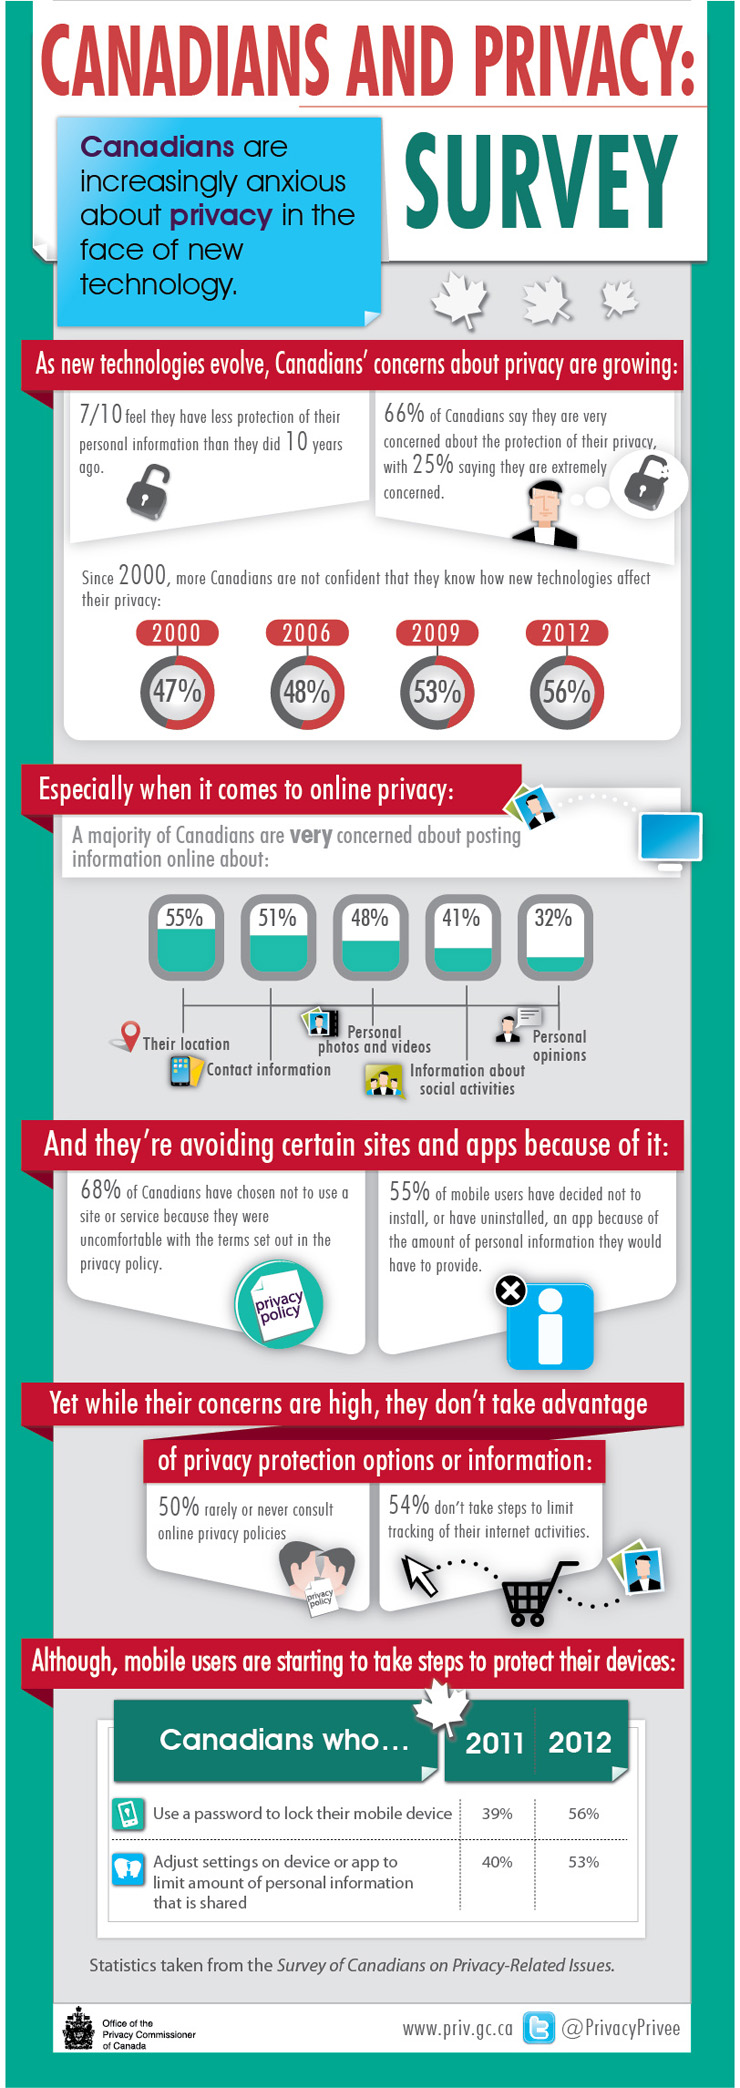 Infographic: Canadians and Privacy: Survey. Description follows.